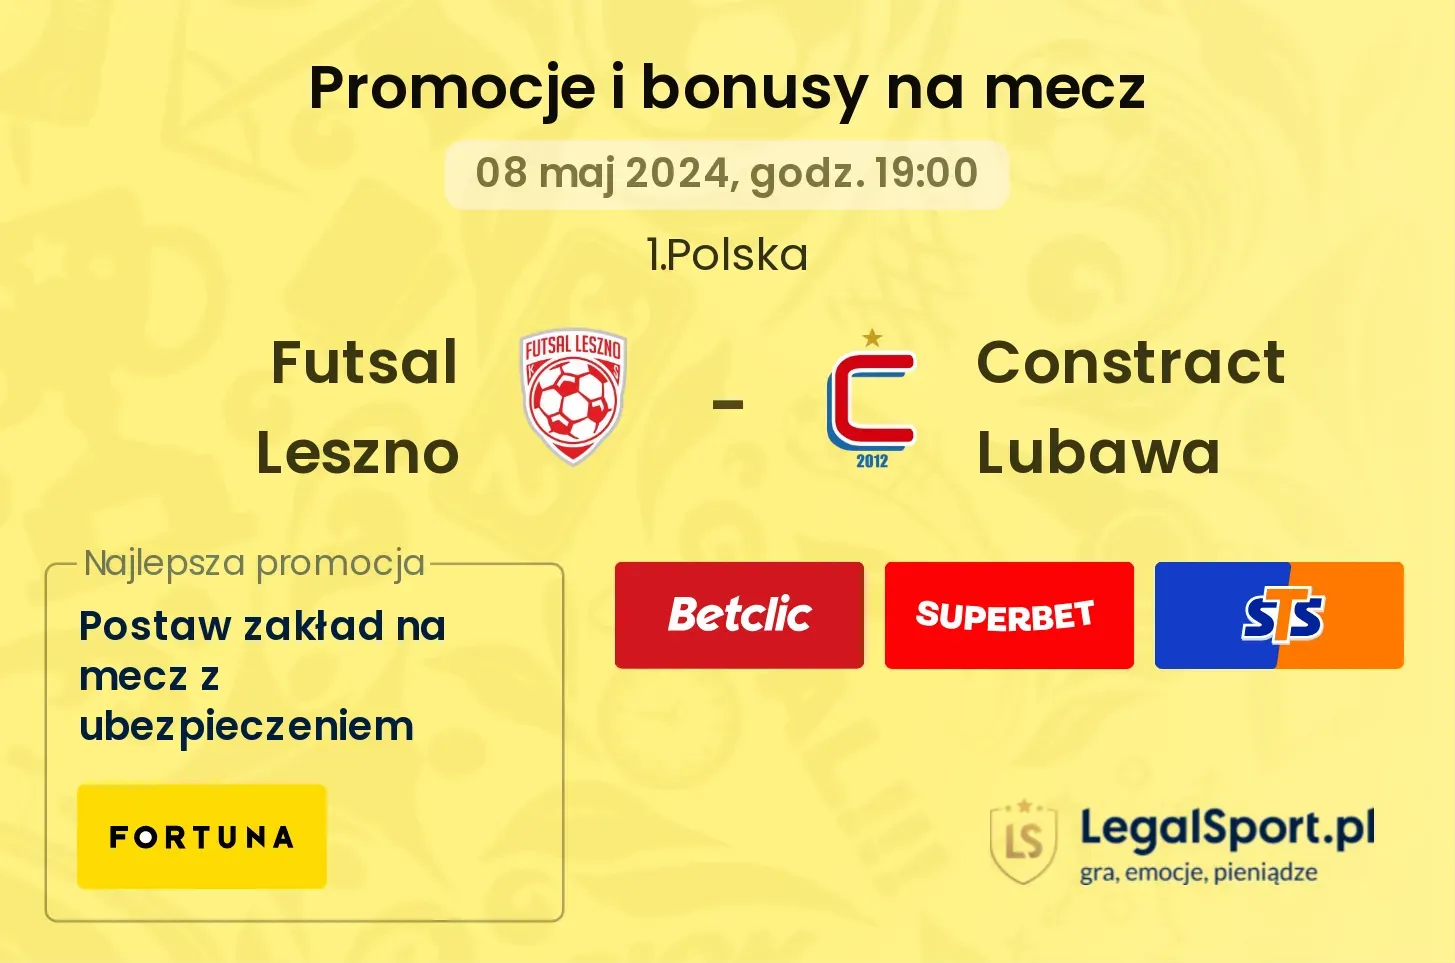 Futsal Leszno - Constract Lubawa promocje bonusy na mecz